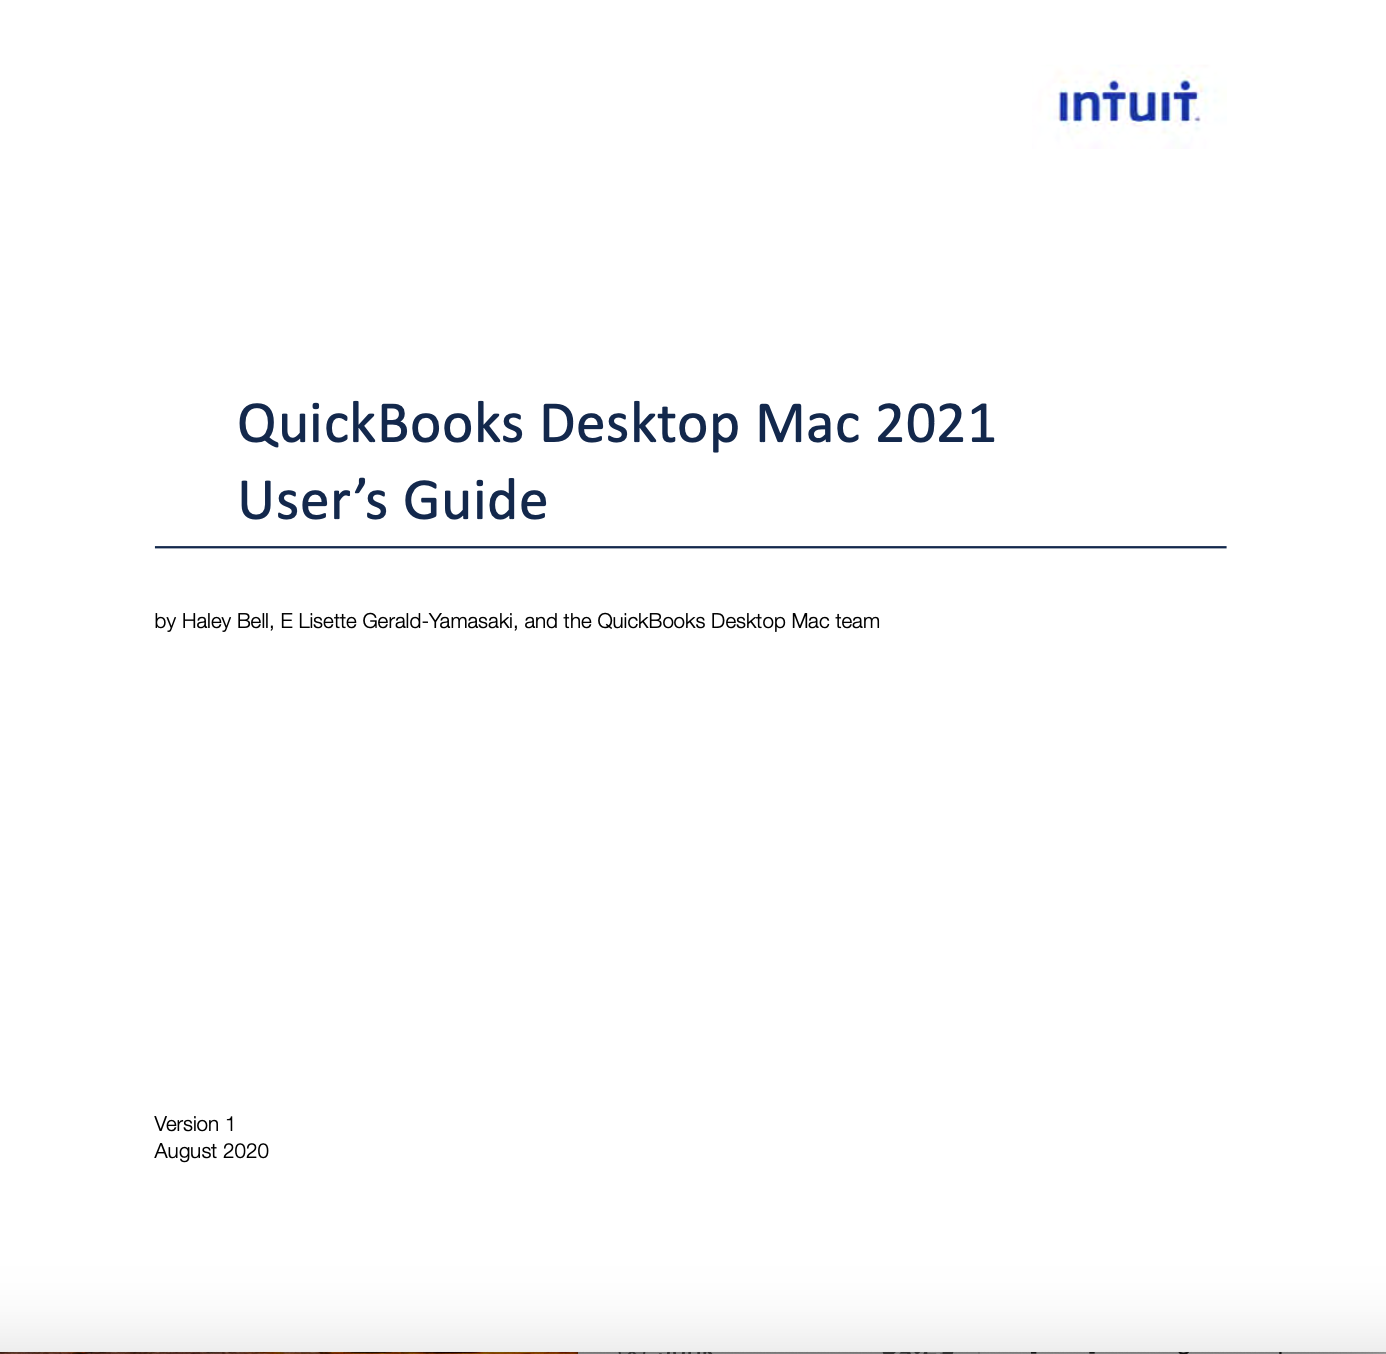 quickbooks user guide for mac